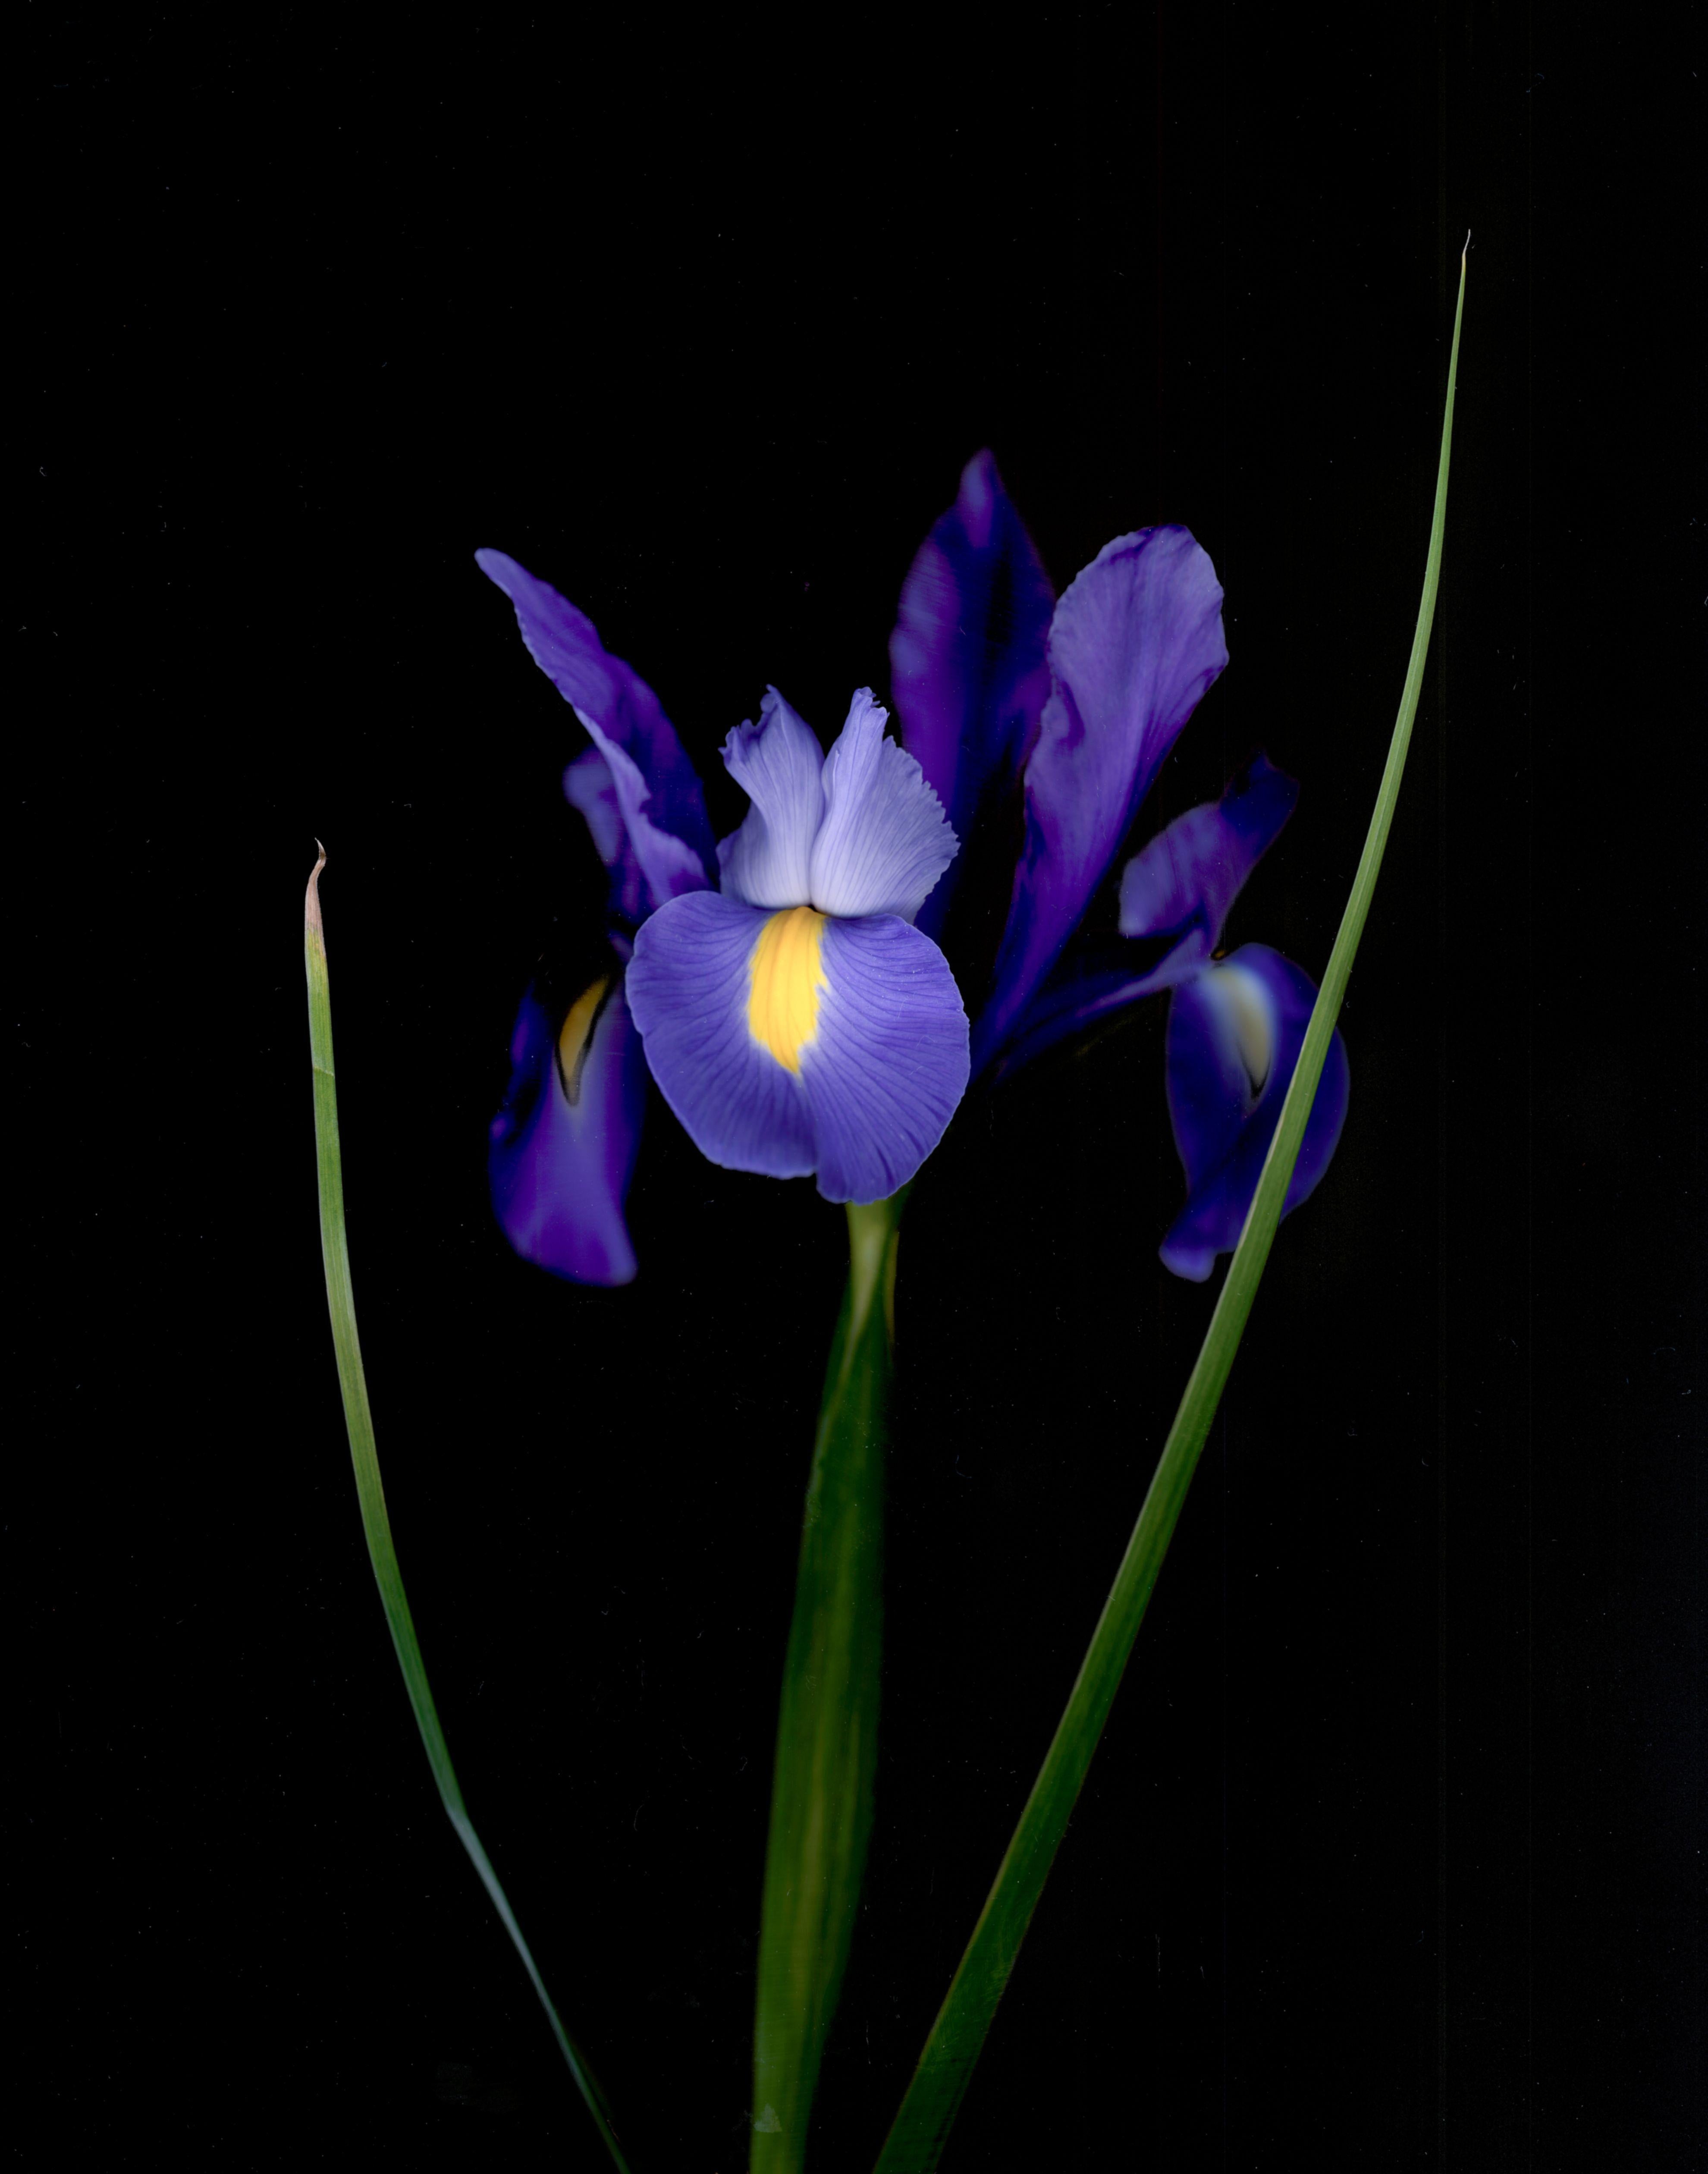 David McCrae Color Photograph - Iris xiphium 'Blue Magic', Photograph, Archival Ink Jet